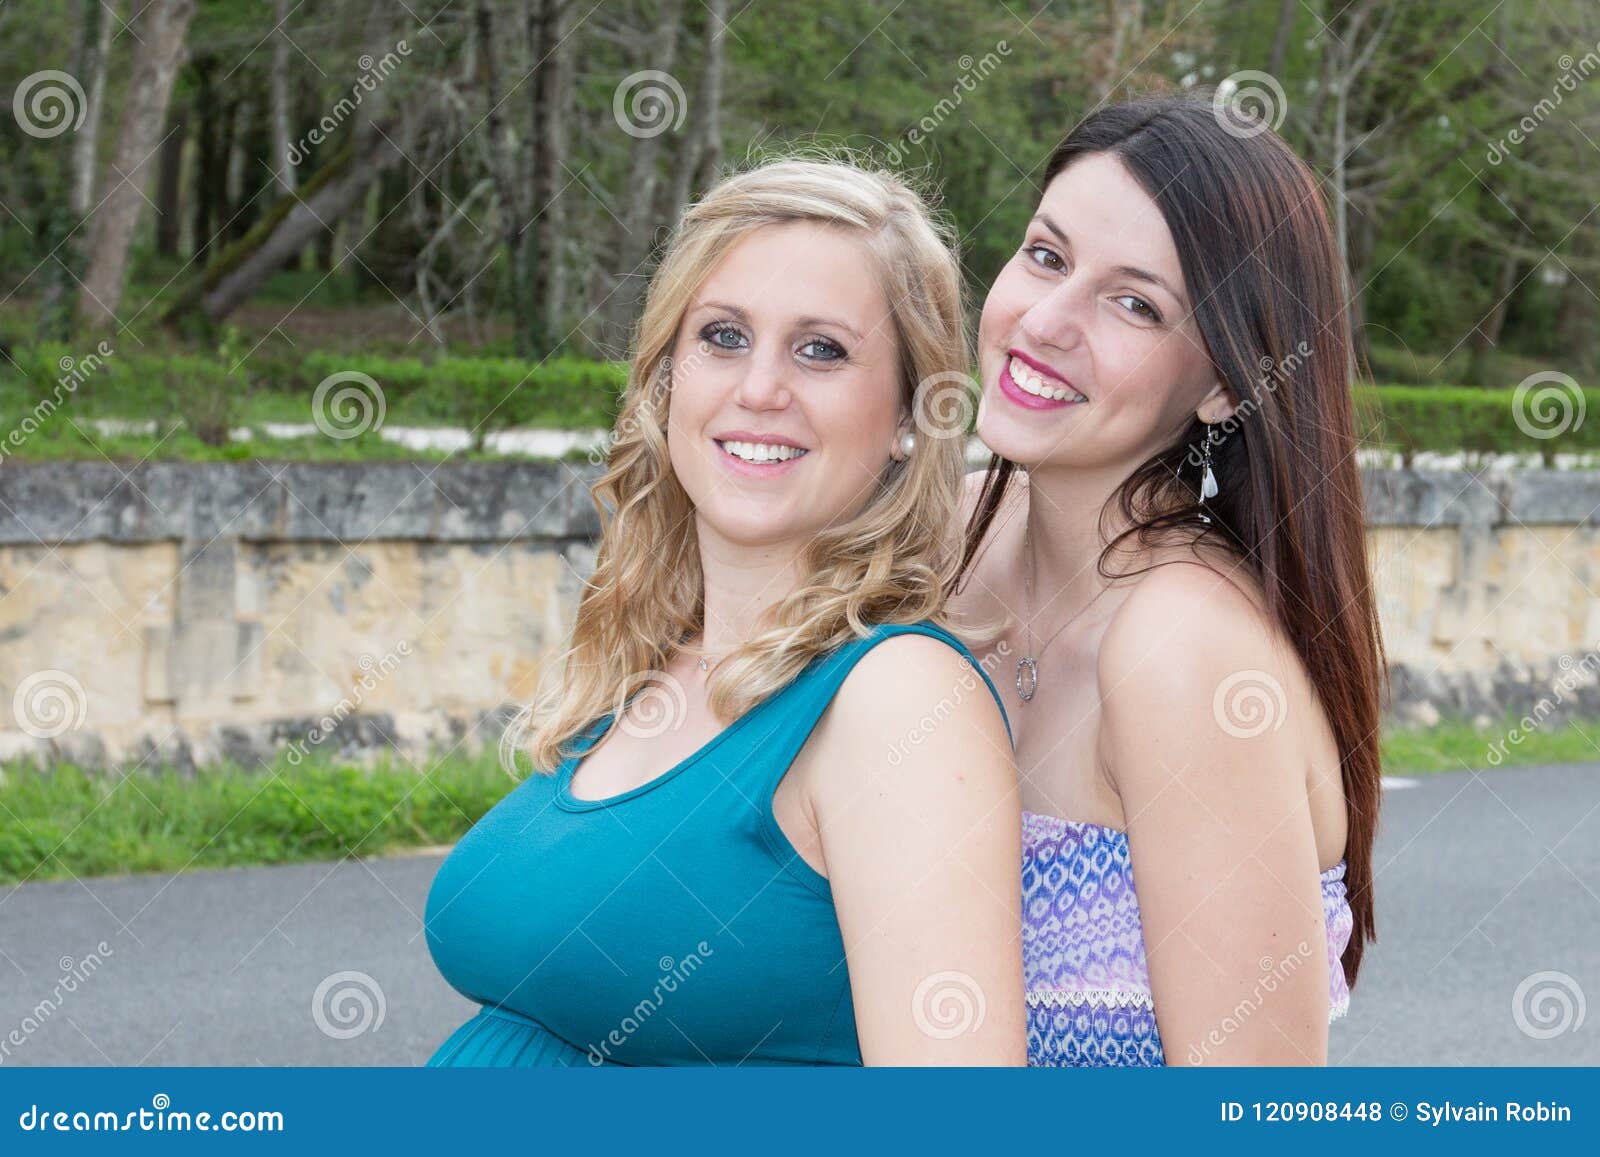 blonde lesbian girls having fun pics